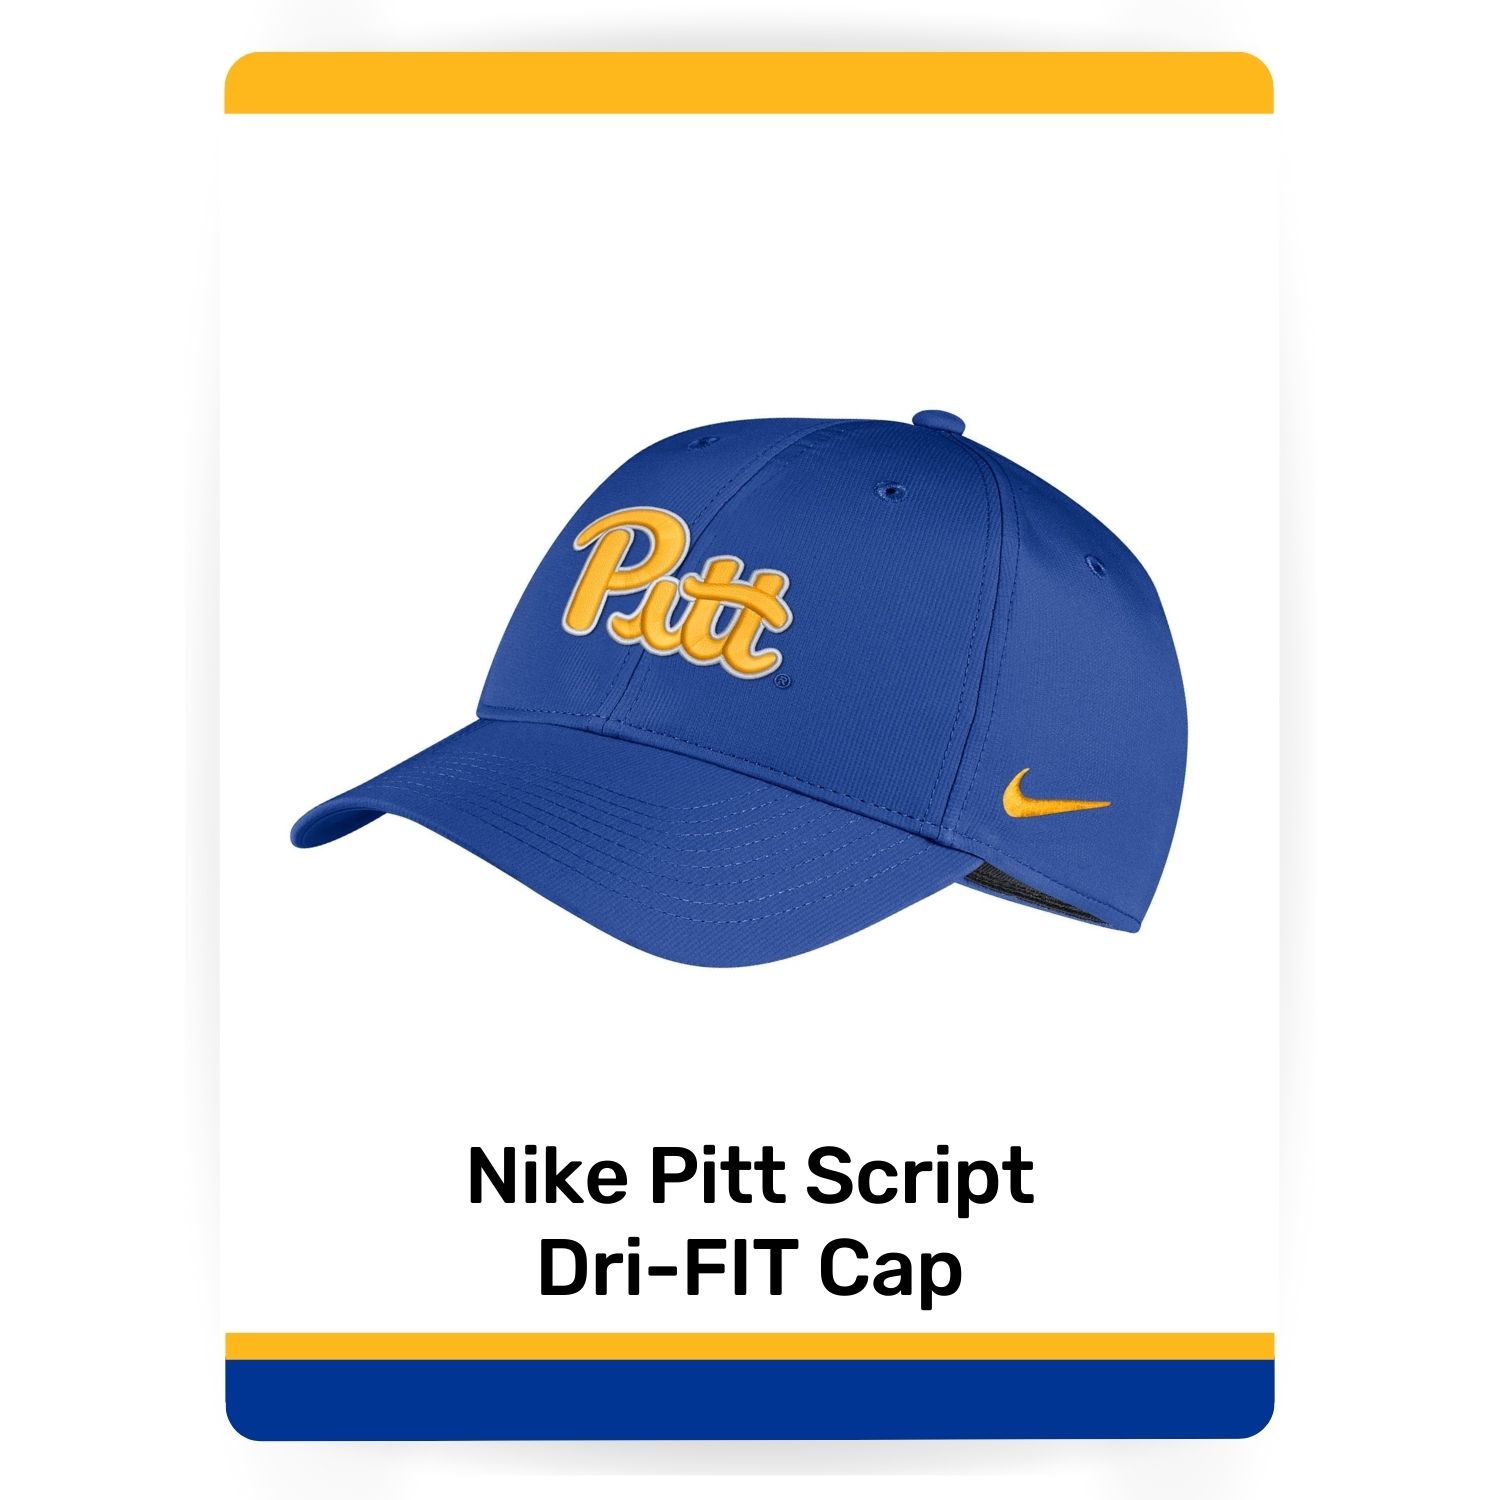 Nike Pitt Script Dri-FIT Cap